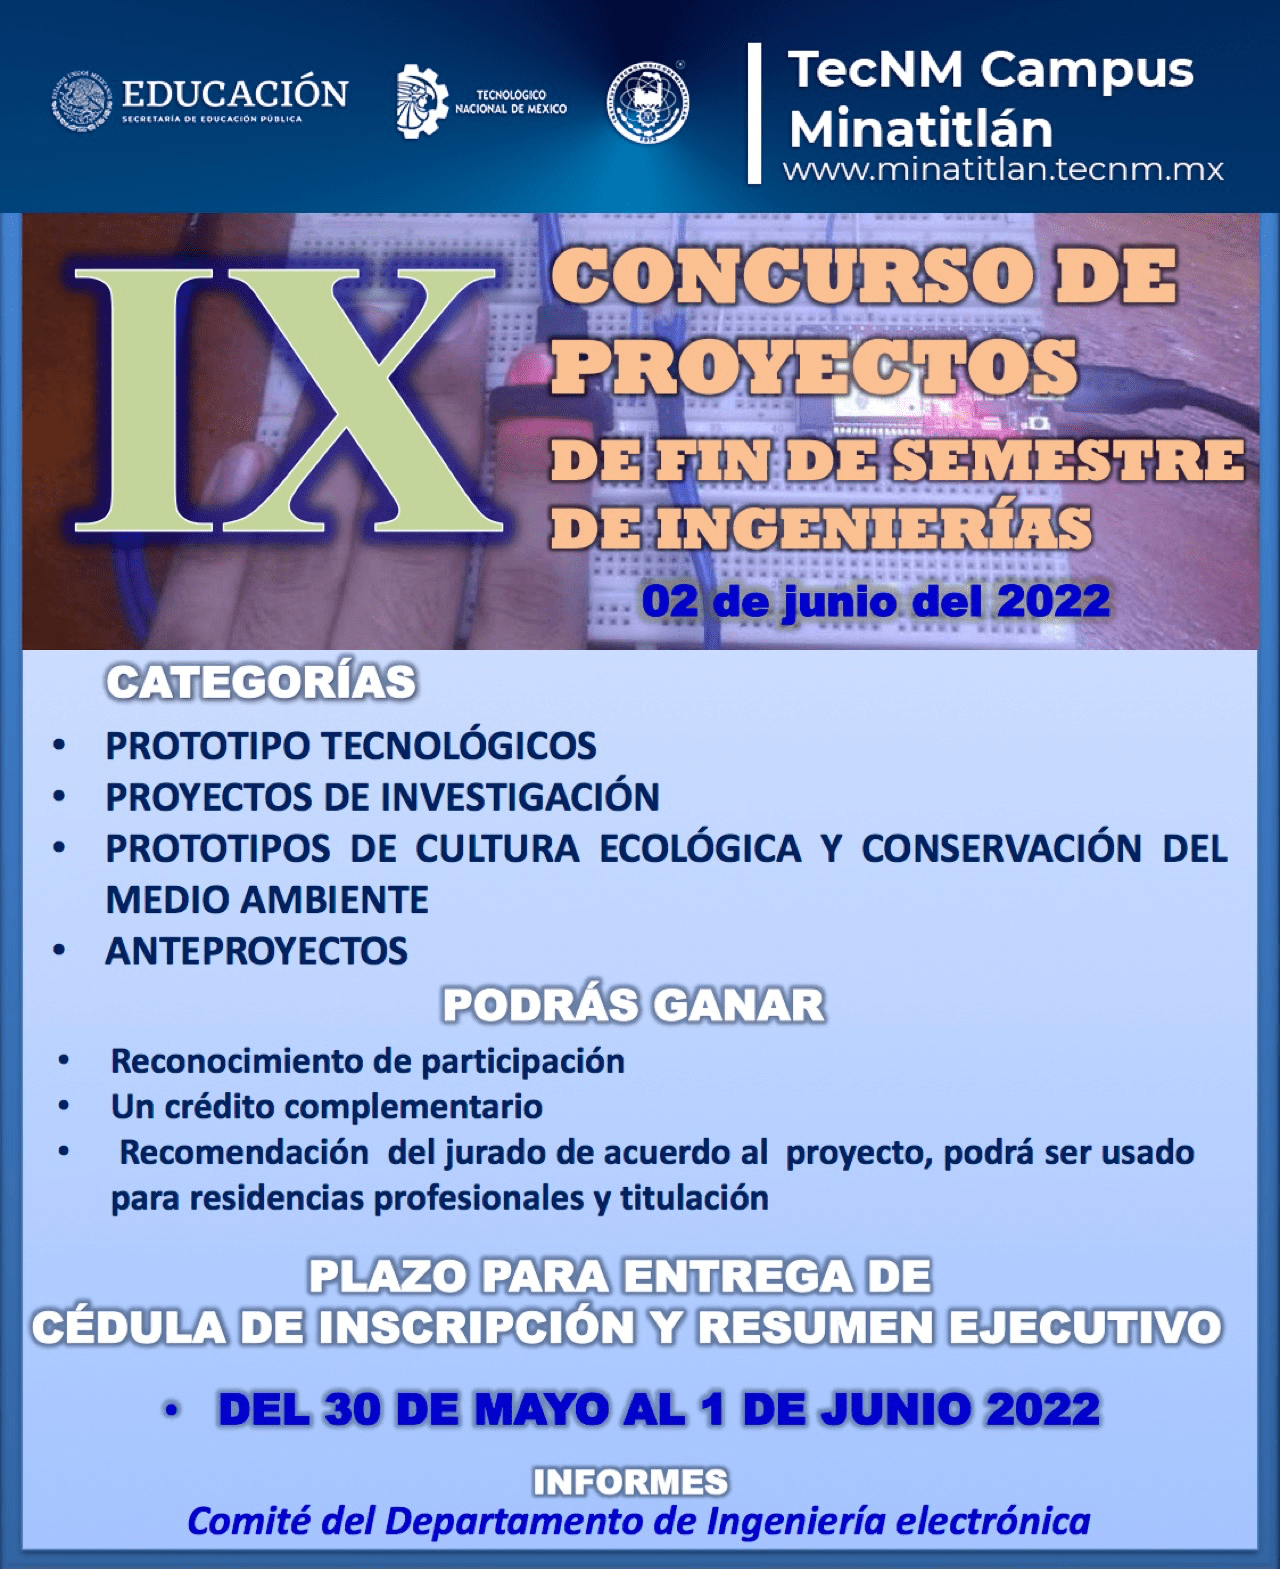 IX CONCURSO DE PROYECTOS DE FIN DE SEMESTRE DE INGENIERÍAS